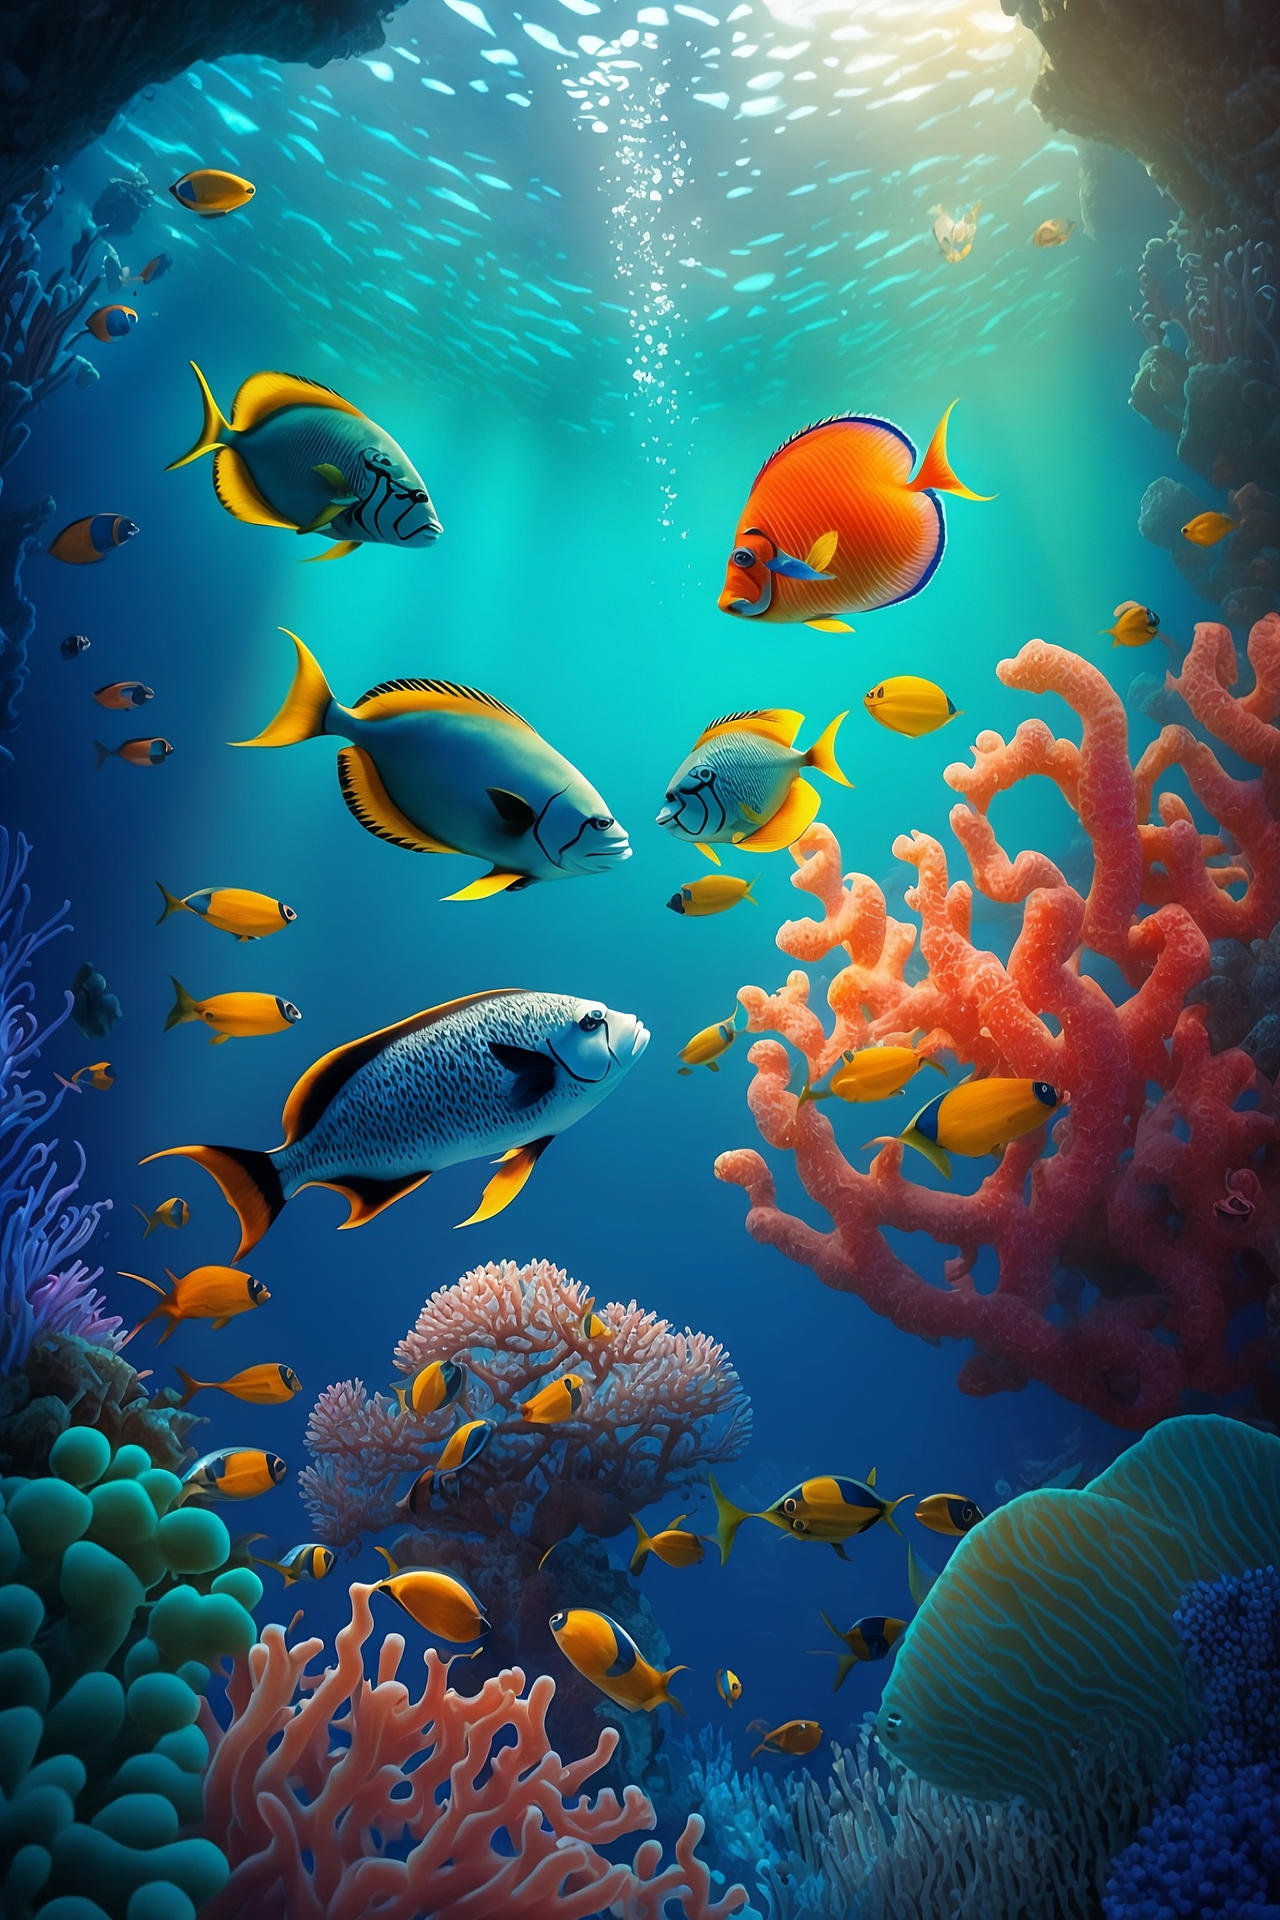 Underwater Beauty: Colorful Fish in Blue Ocean by ArtfulAbode on DeviantArt